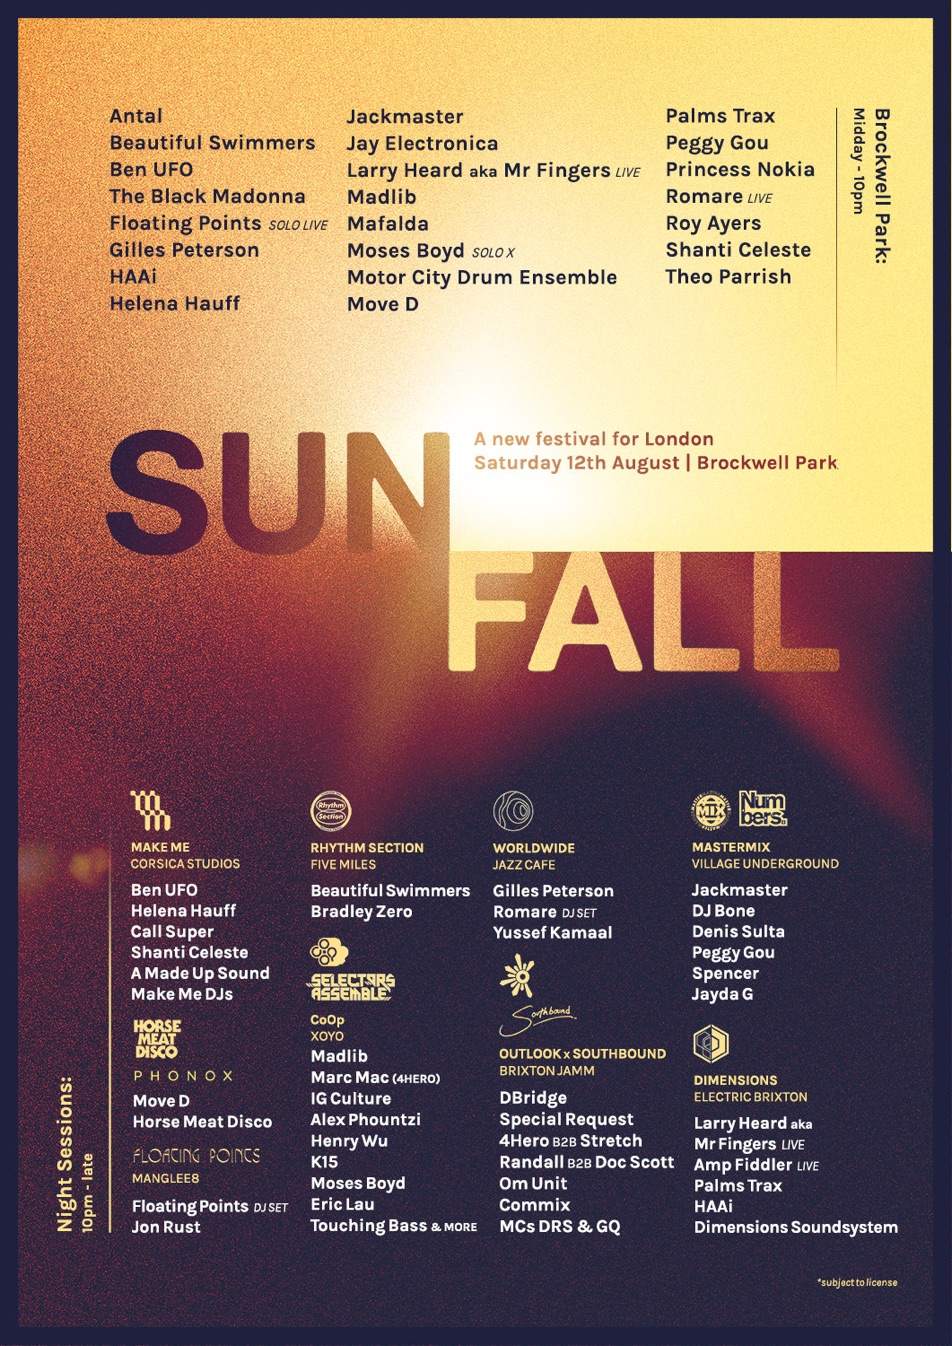 Sunfall rejigs nighttime program with DJ Bone, Madlib image